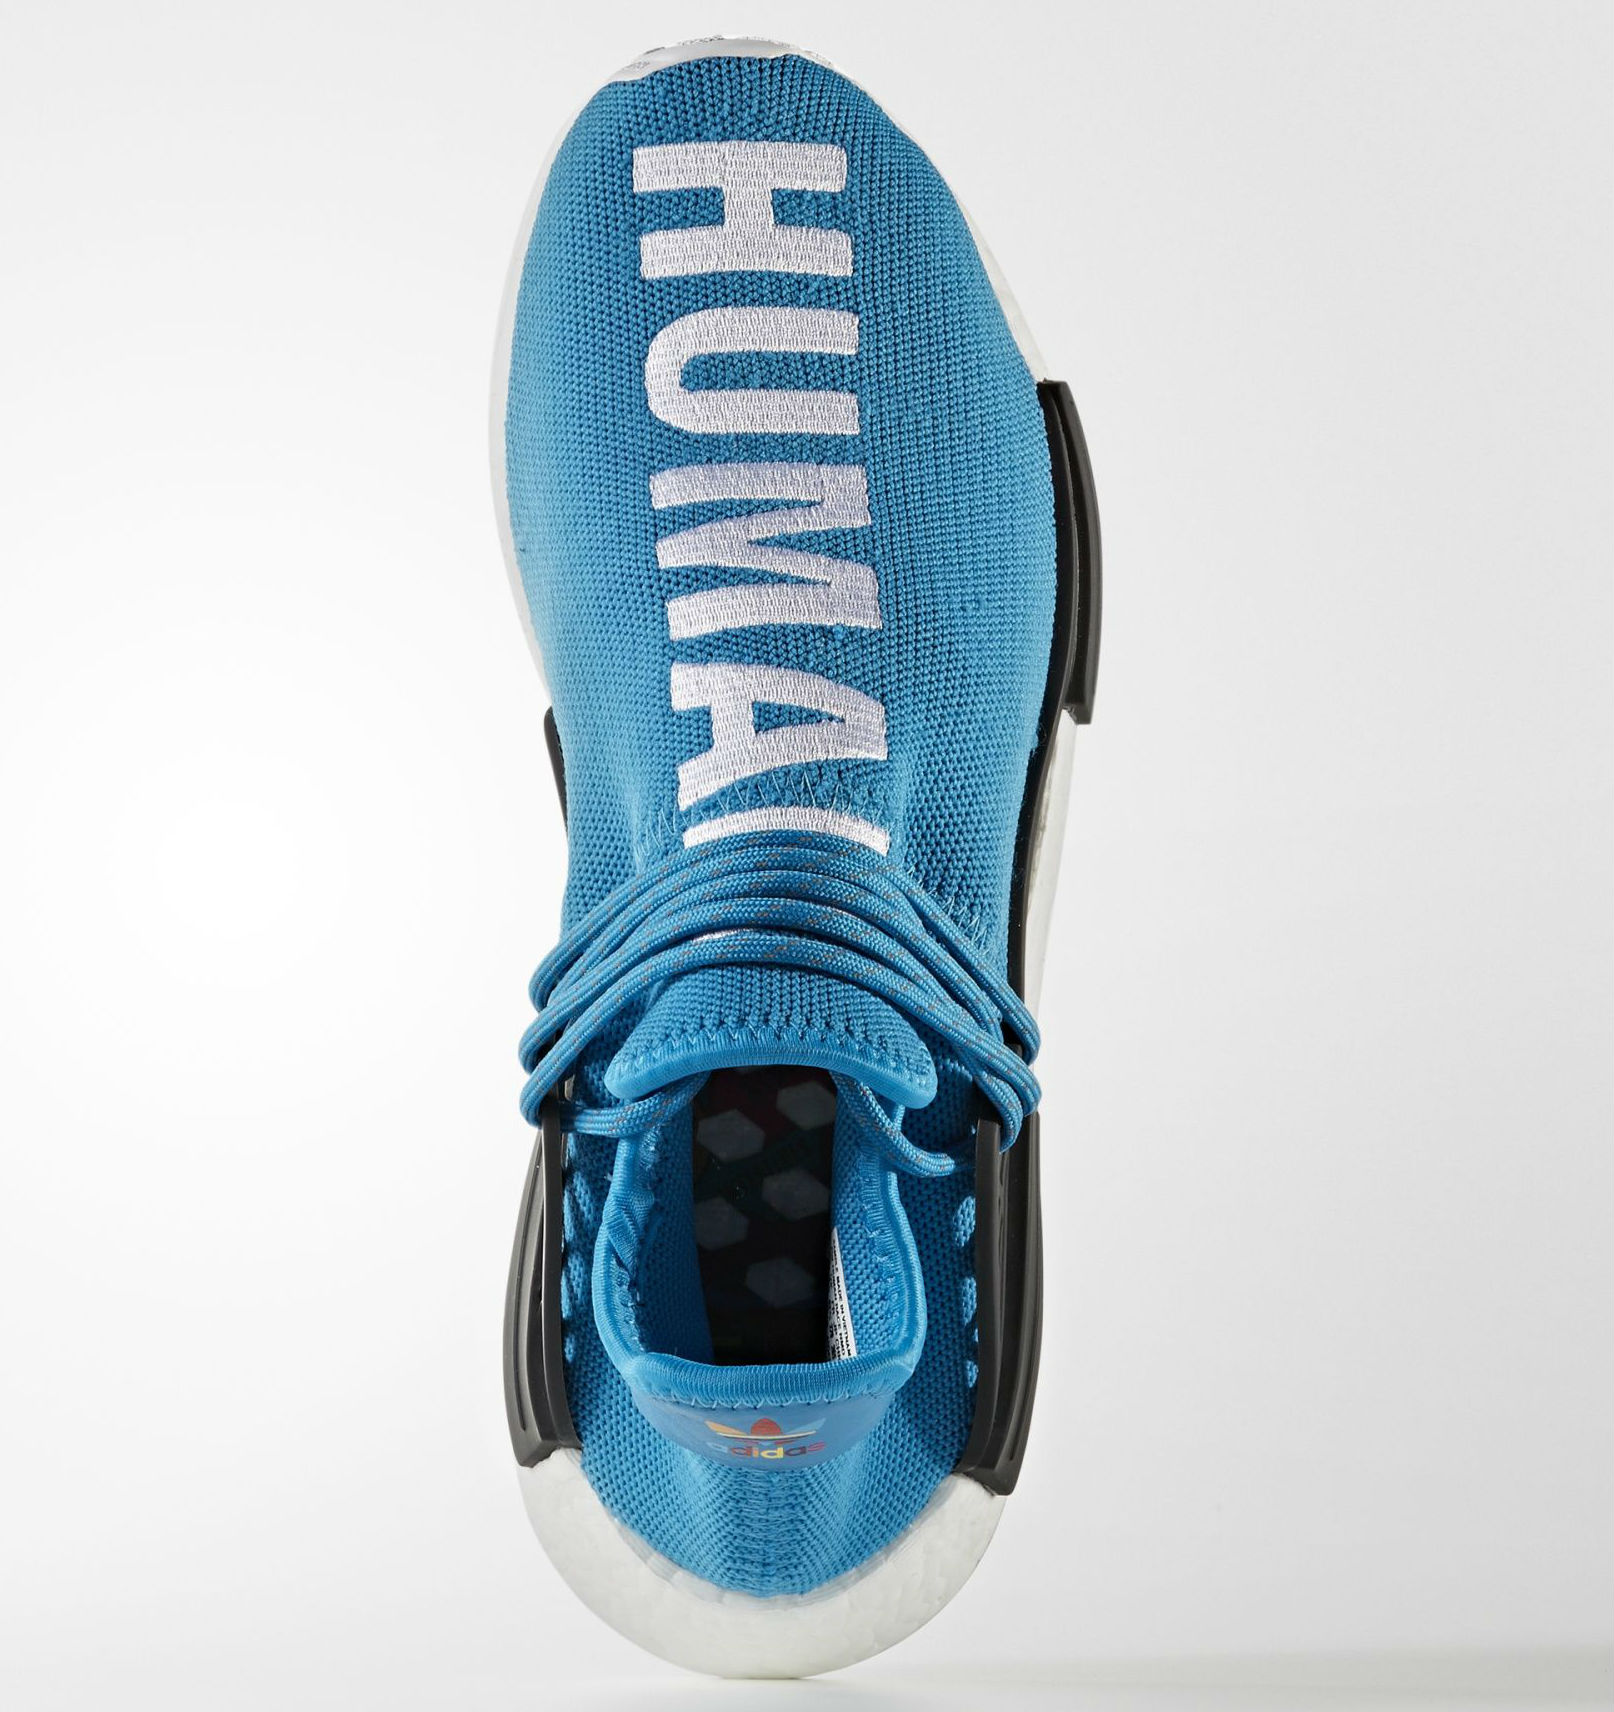 Blue Pharrell adidas NMD Human Race